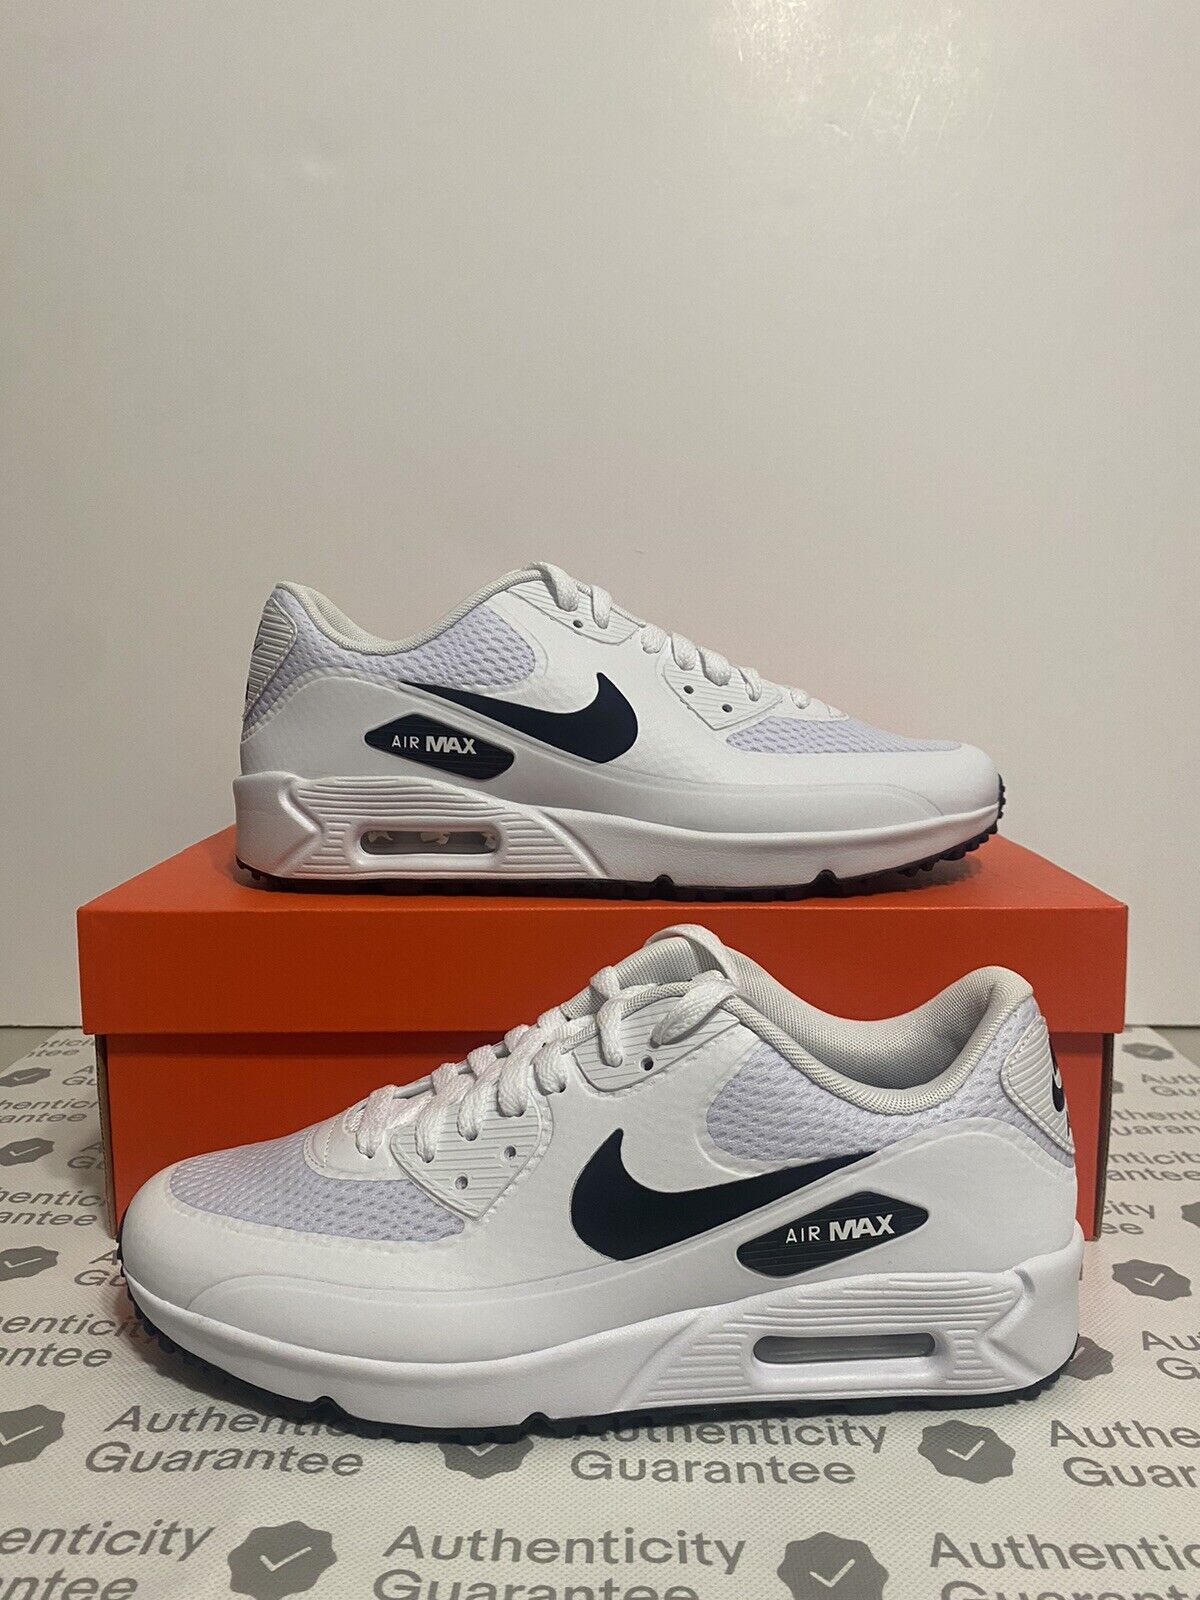 Nike Air Max 90 G Men's Golf Shoes White/Black Size 7.5 CU9978-101